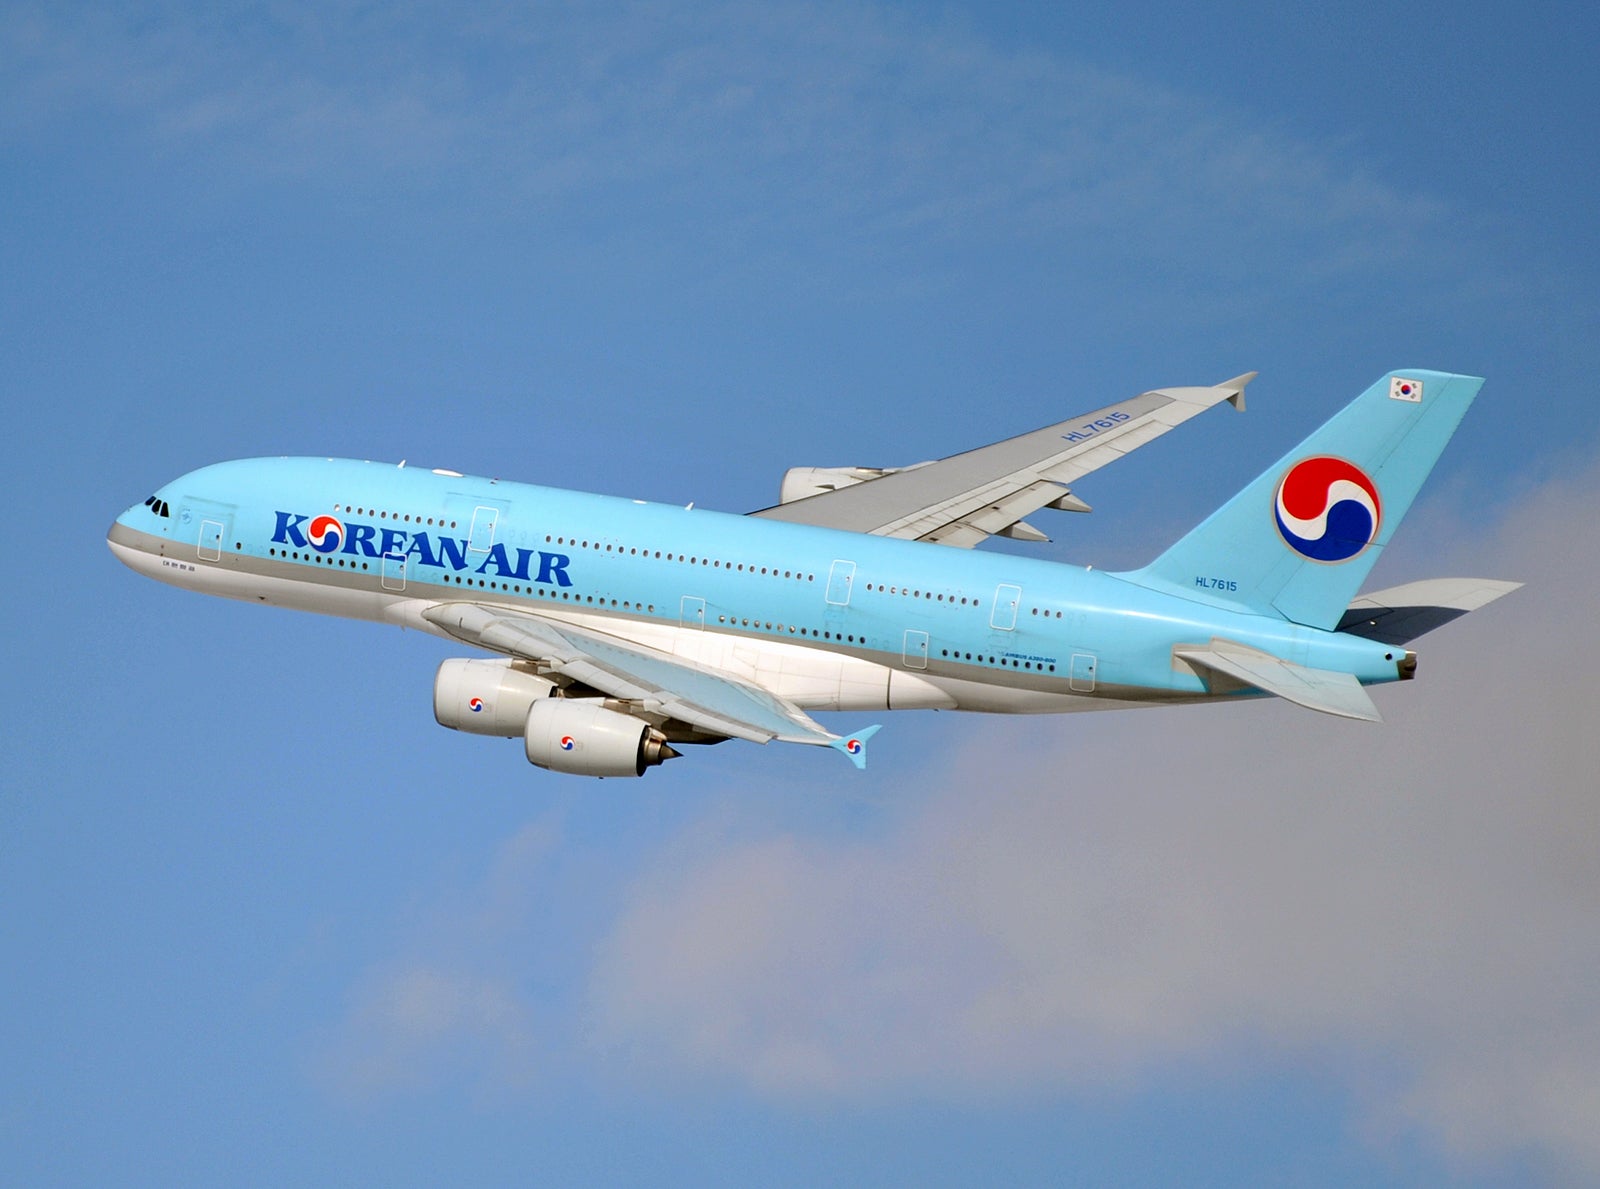 Korean Air Airbus A380 at JFK